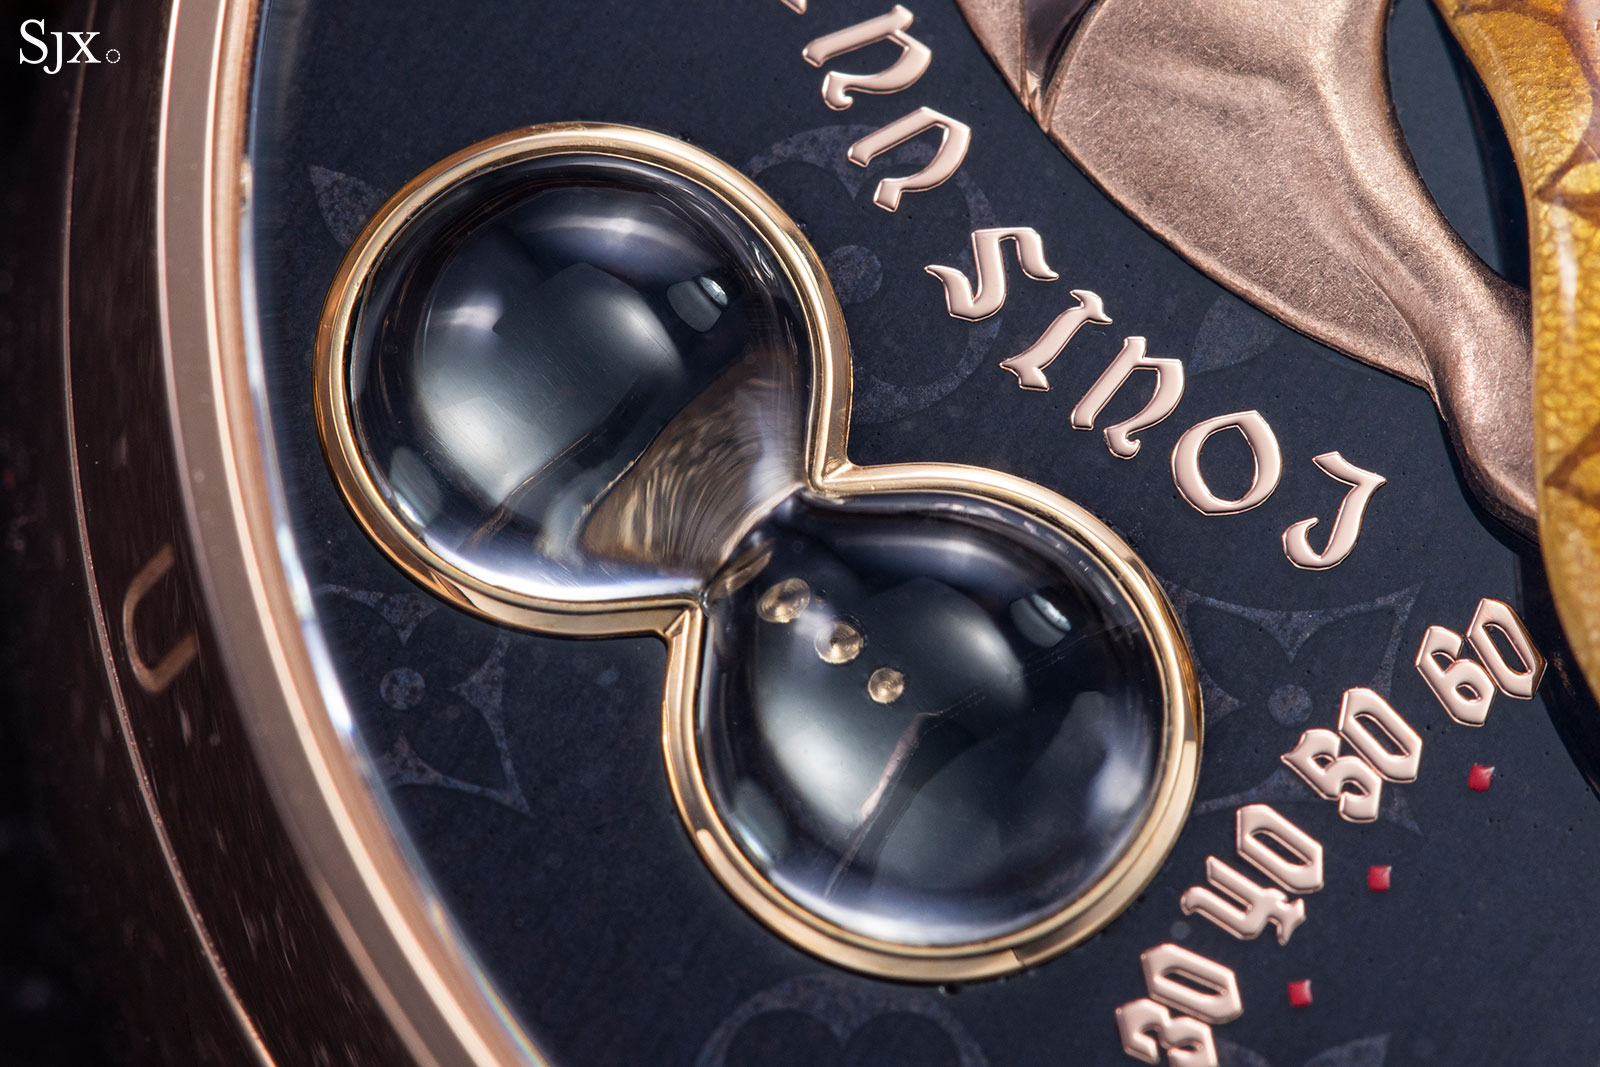 Up Close: Louis Vuitton Tambour Carpe Diem Automaton Minute Repeater